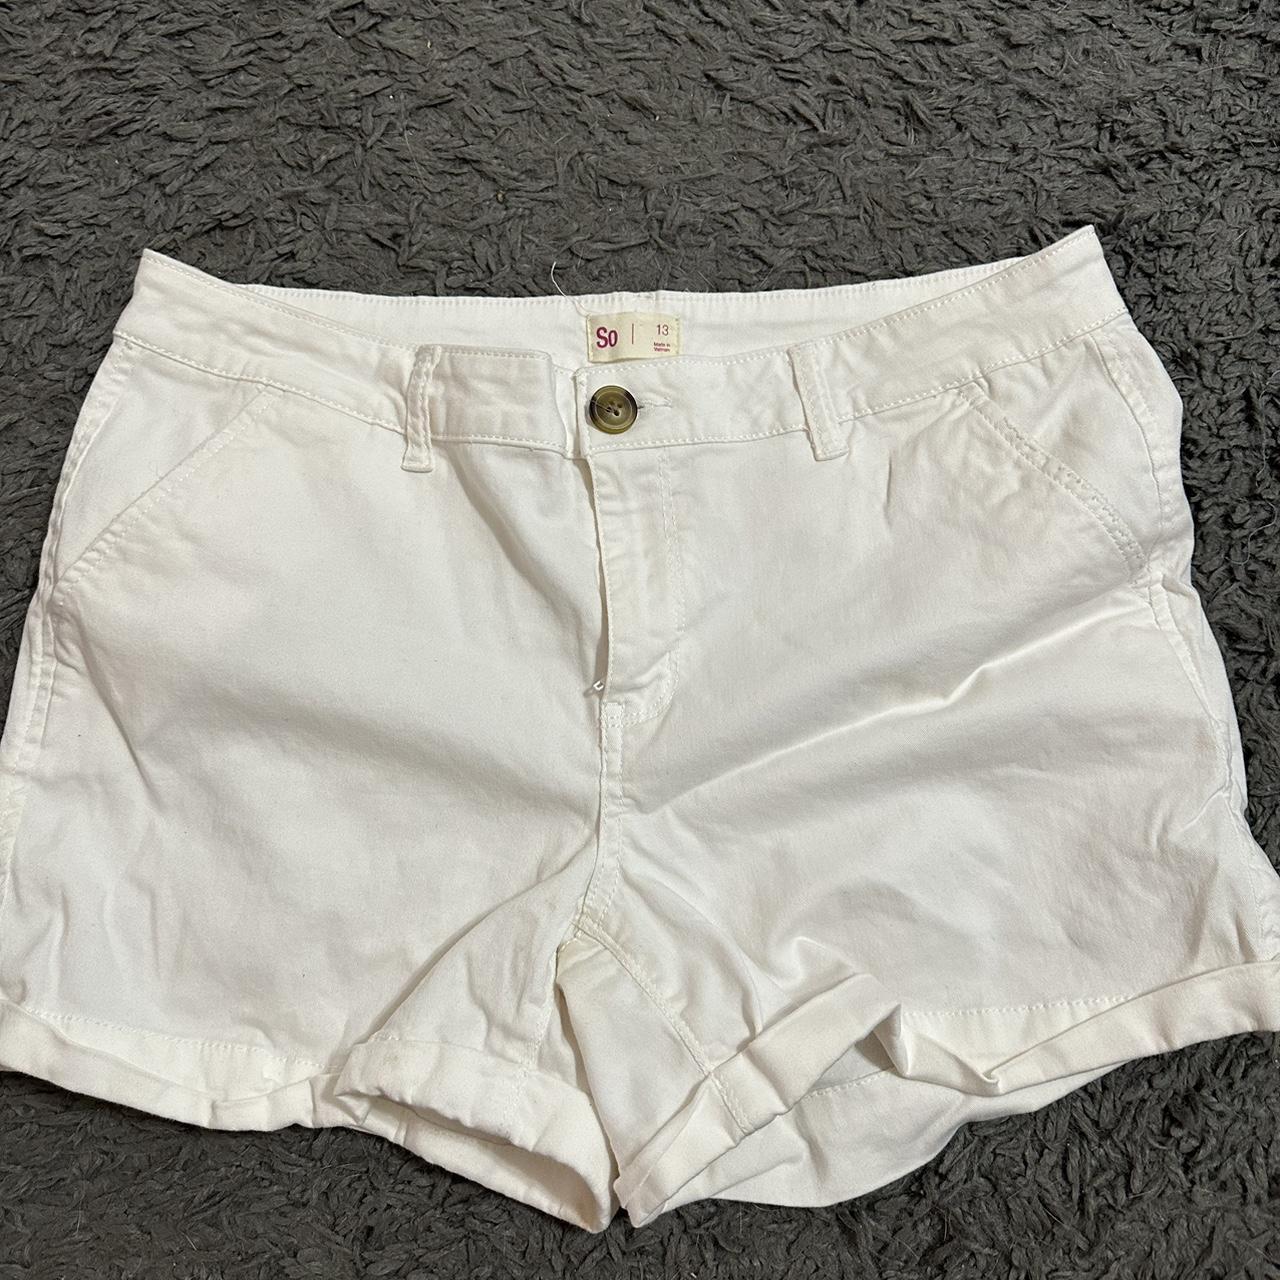 SO white shorts • SIZE 13 - Depop